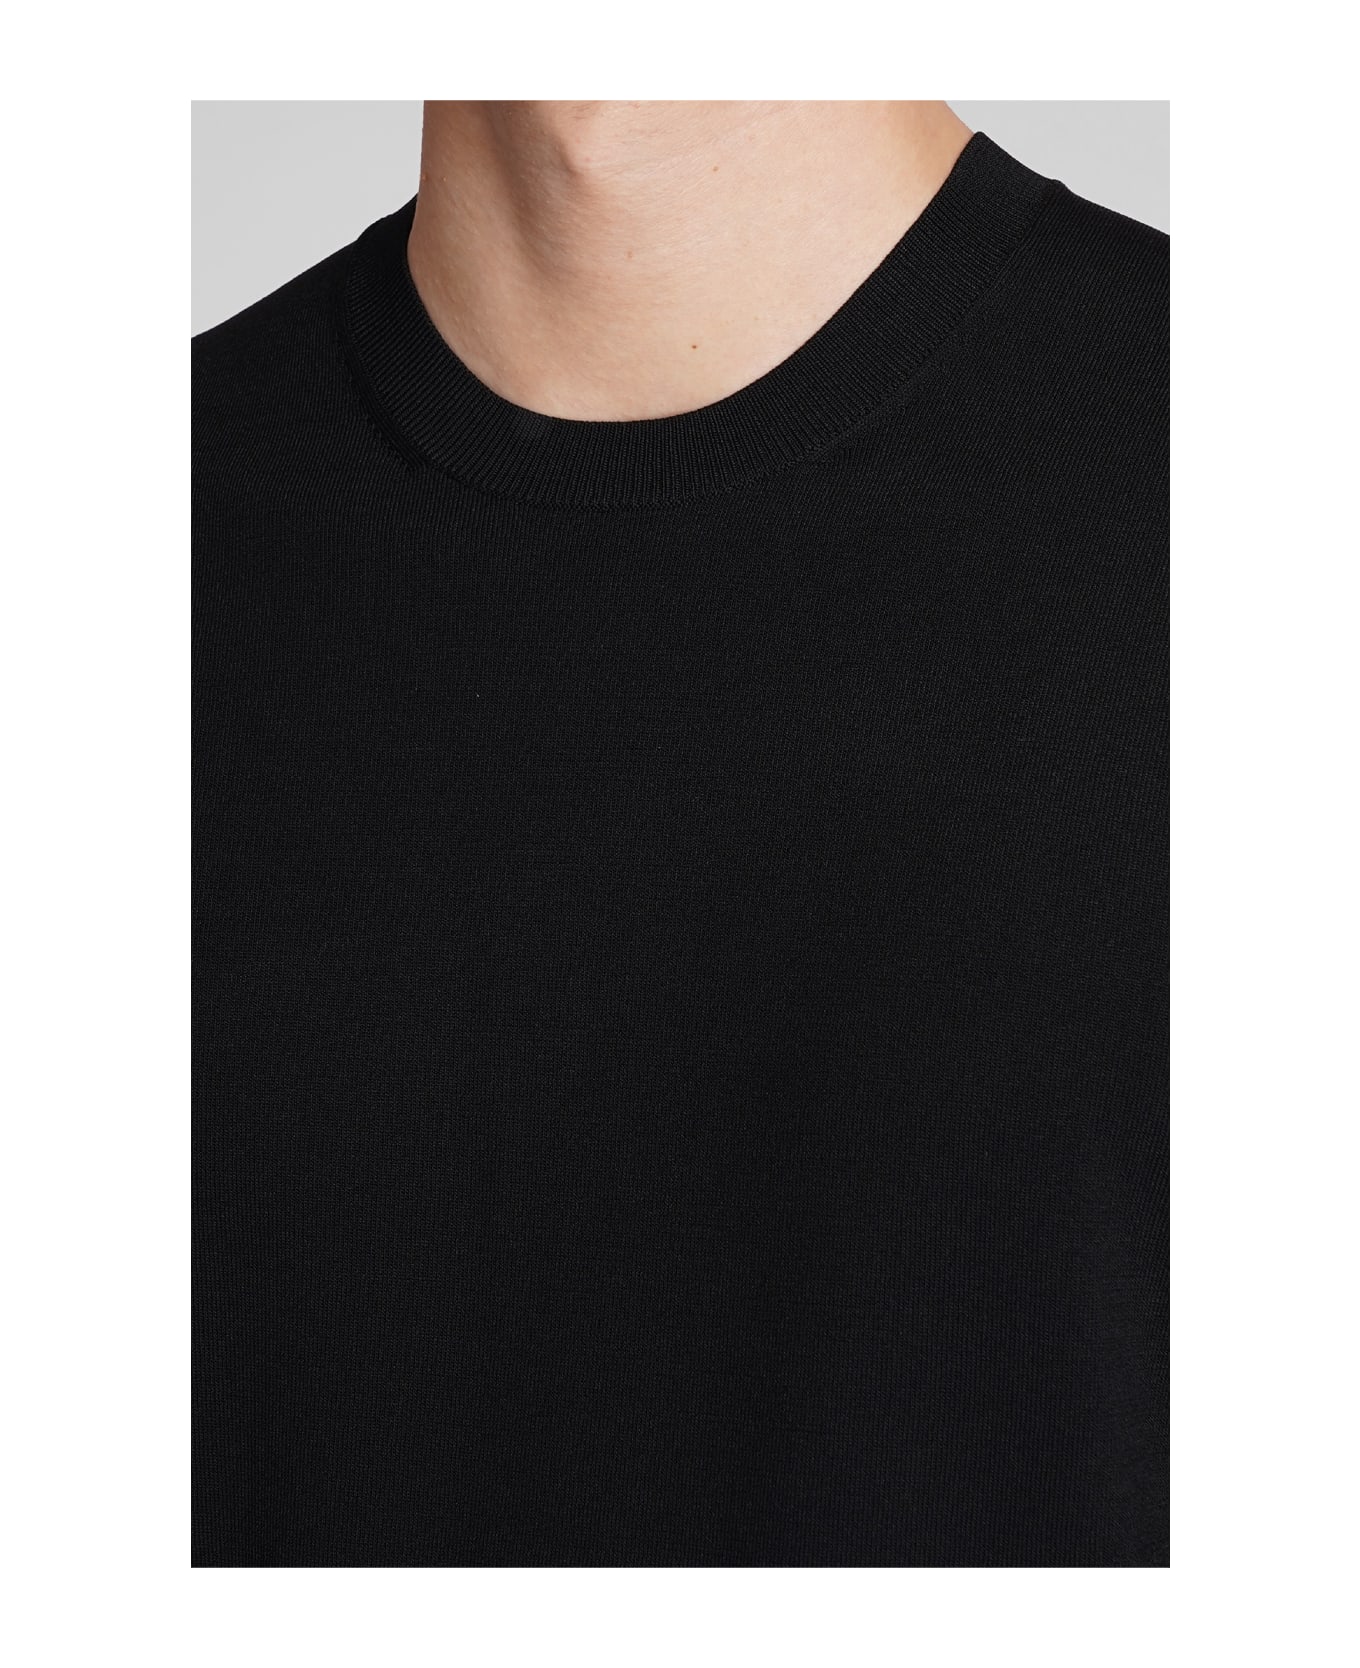 Neil Barrett T-shirt In Black Viscose - black